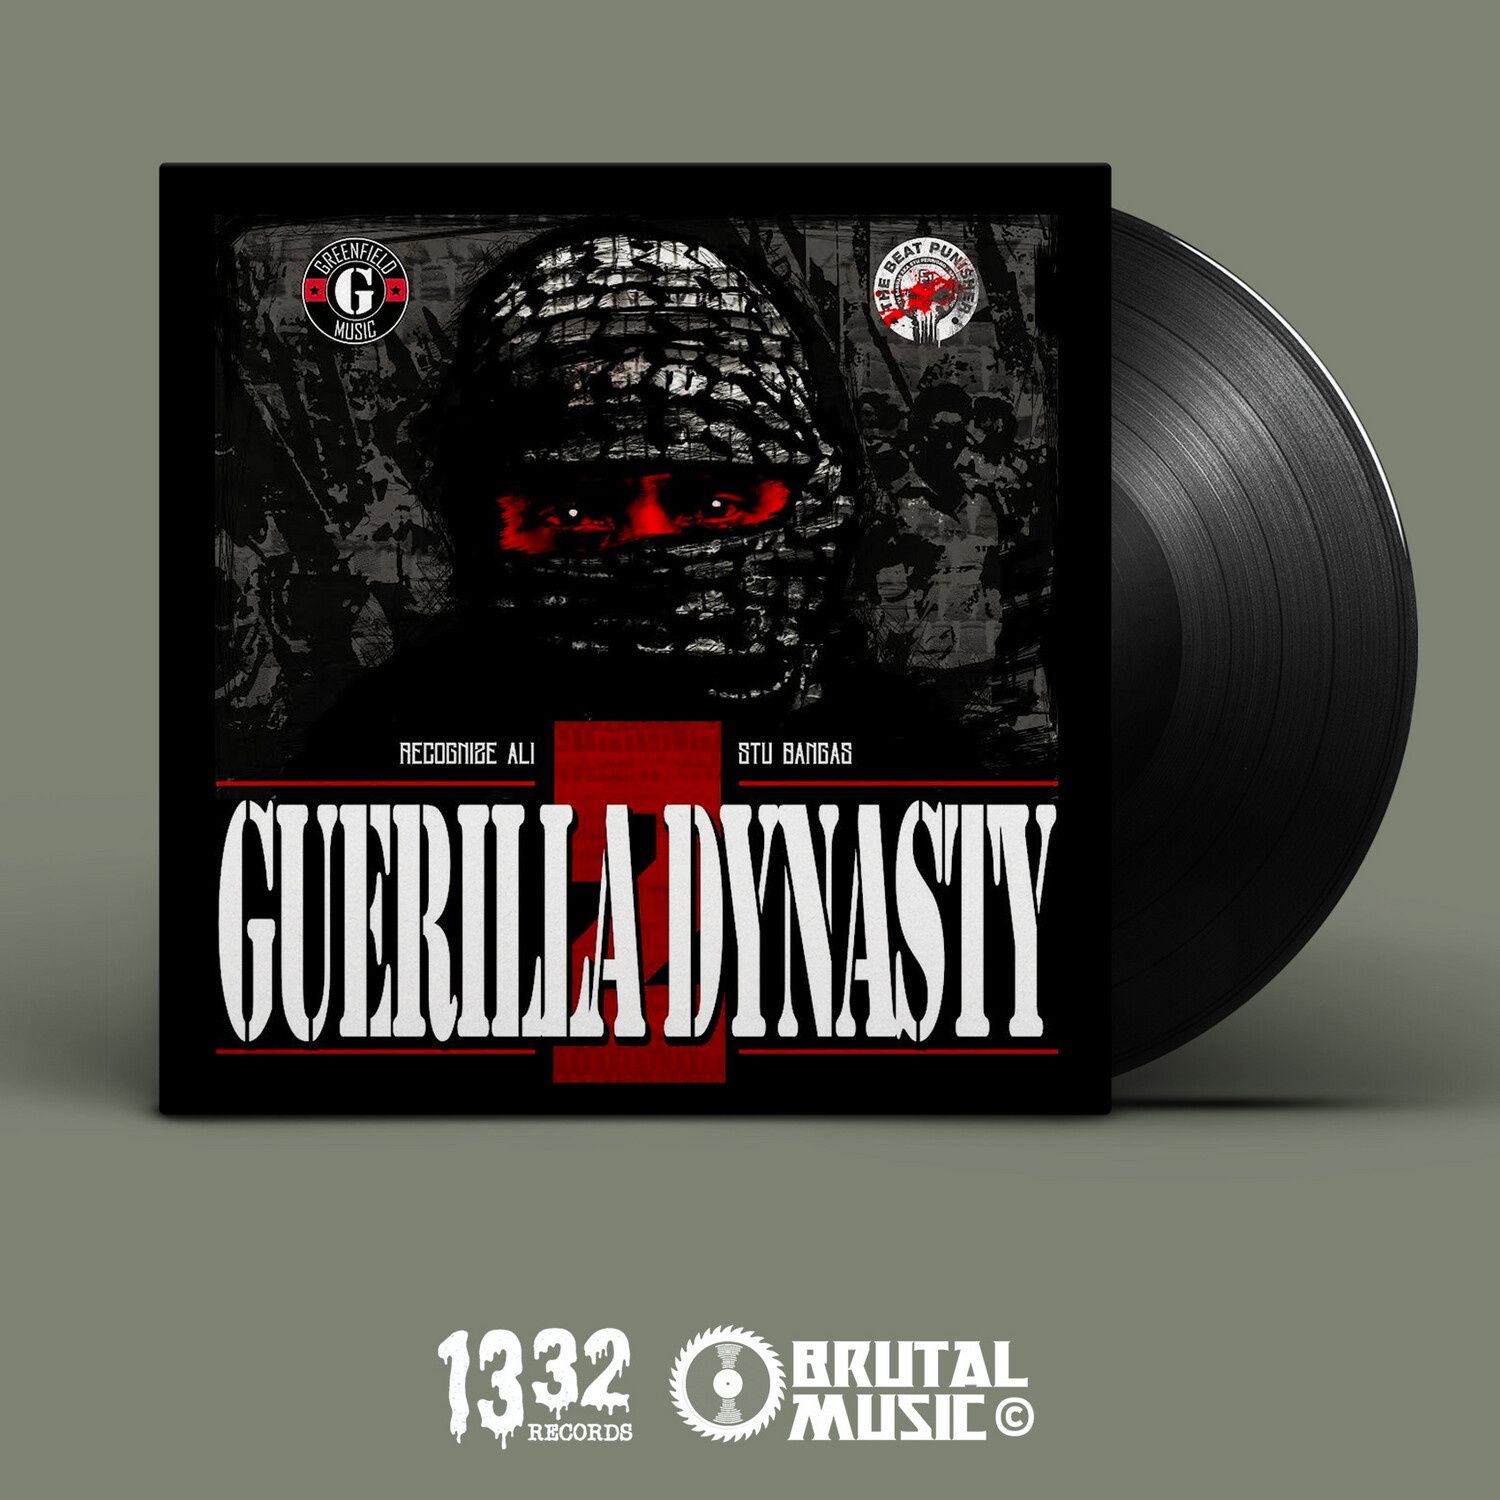 Stu Bangas And Recognize Ali “Guerilla Dynasty 2” Vinyl - Limited Edition Vinyl